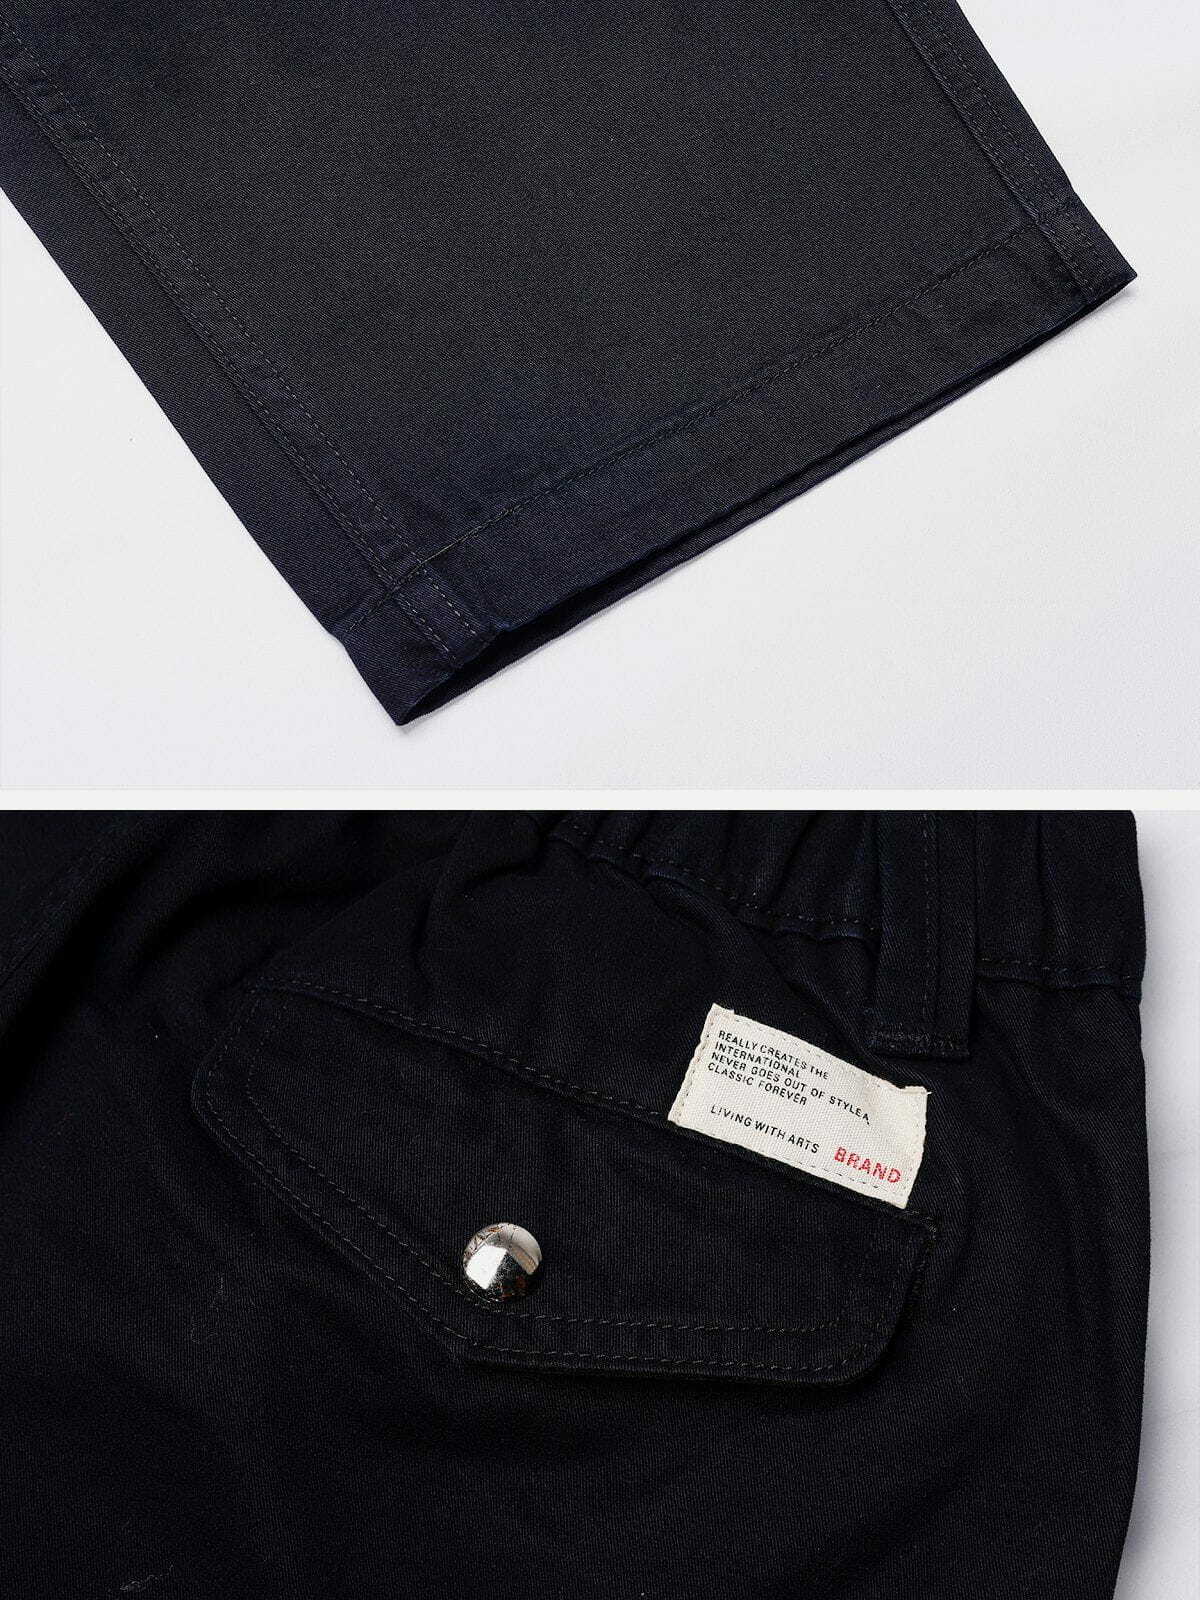 solid button pants sleek & urban streetwear 7924